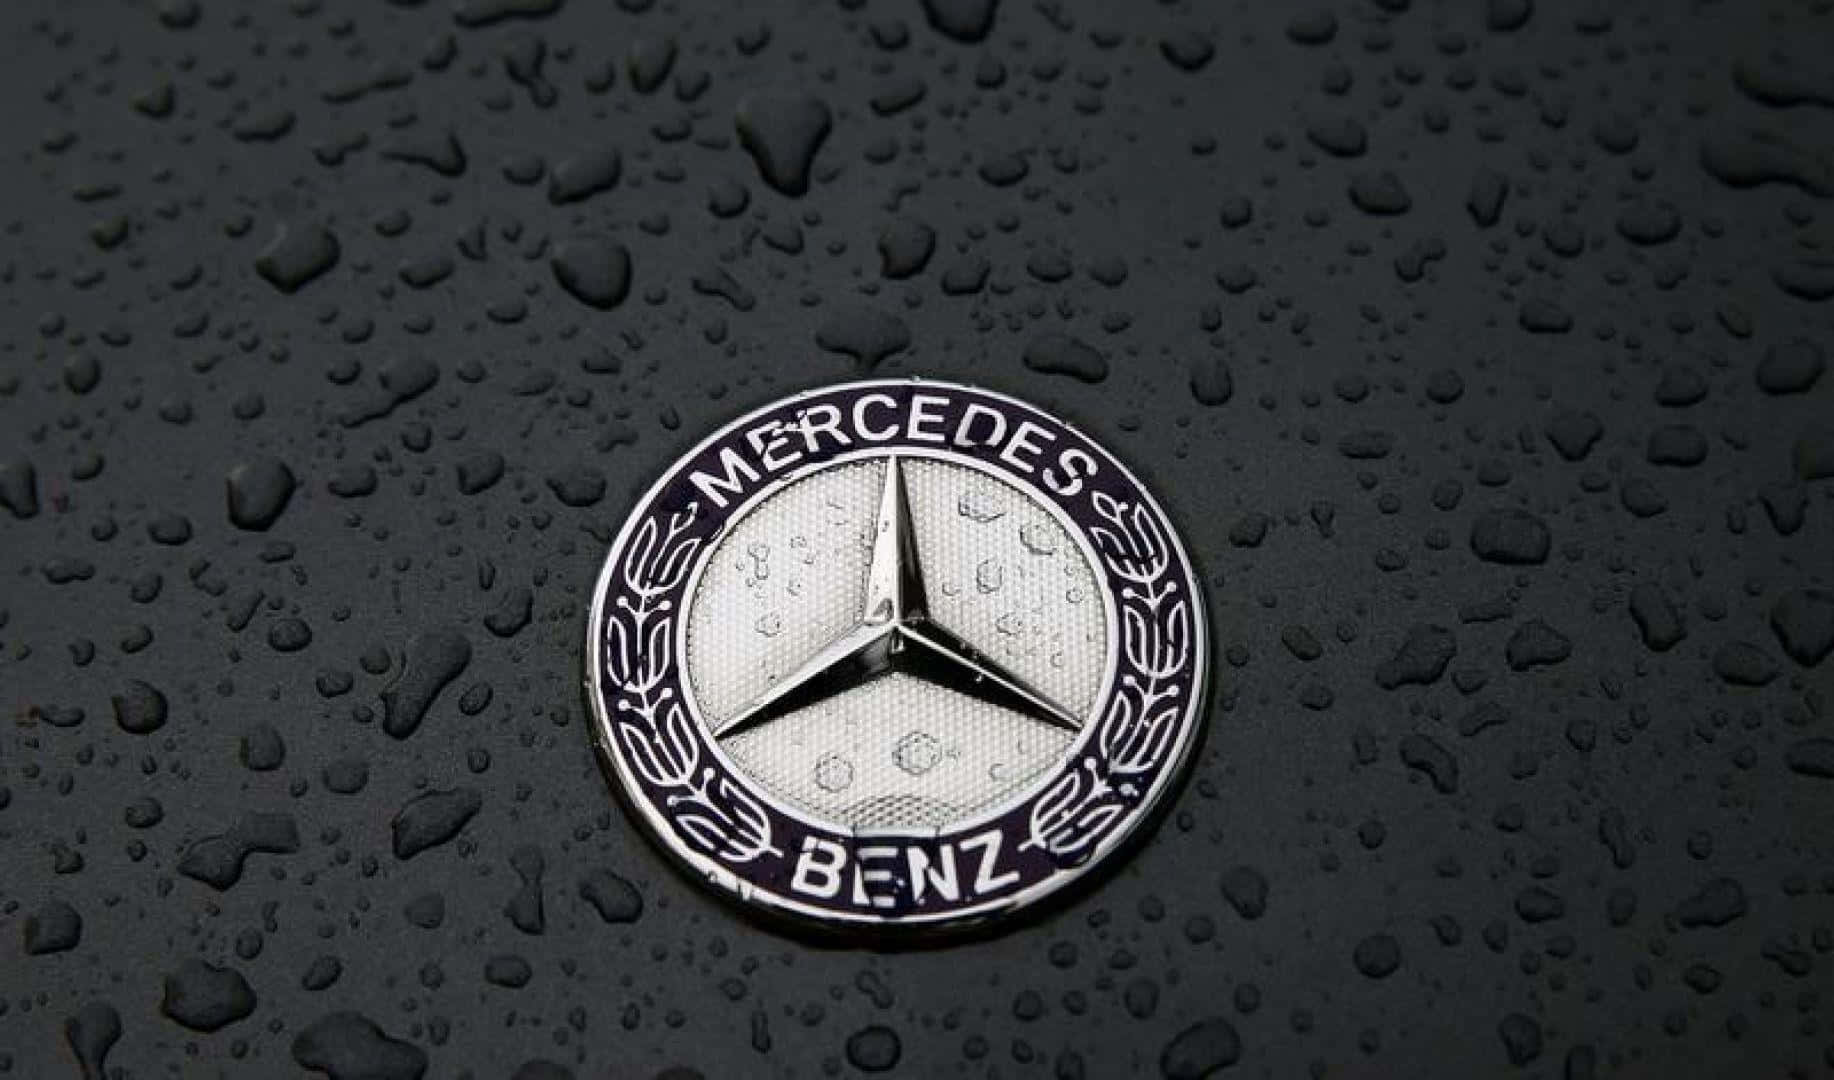 The Mercedes Benz logo symbolizes luxury, performance, and style.